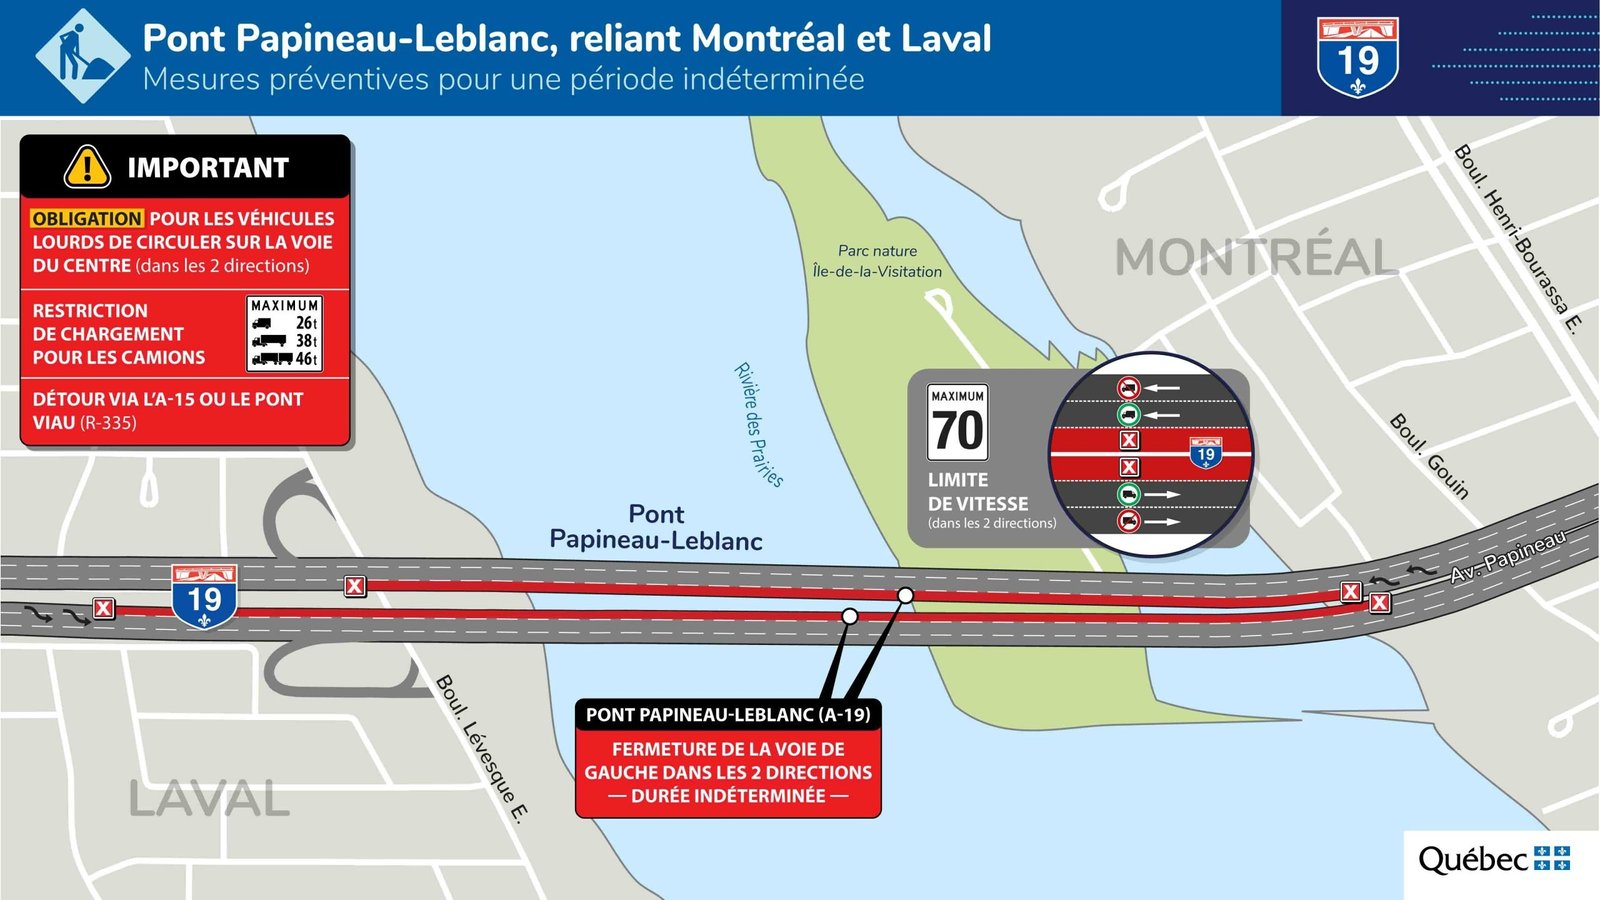 Lane closings, trucks restricted on Papineau-Leblanc Bridge starting June 11